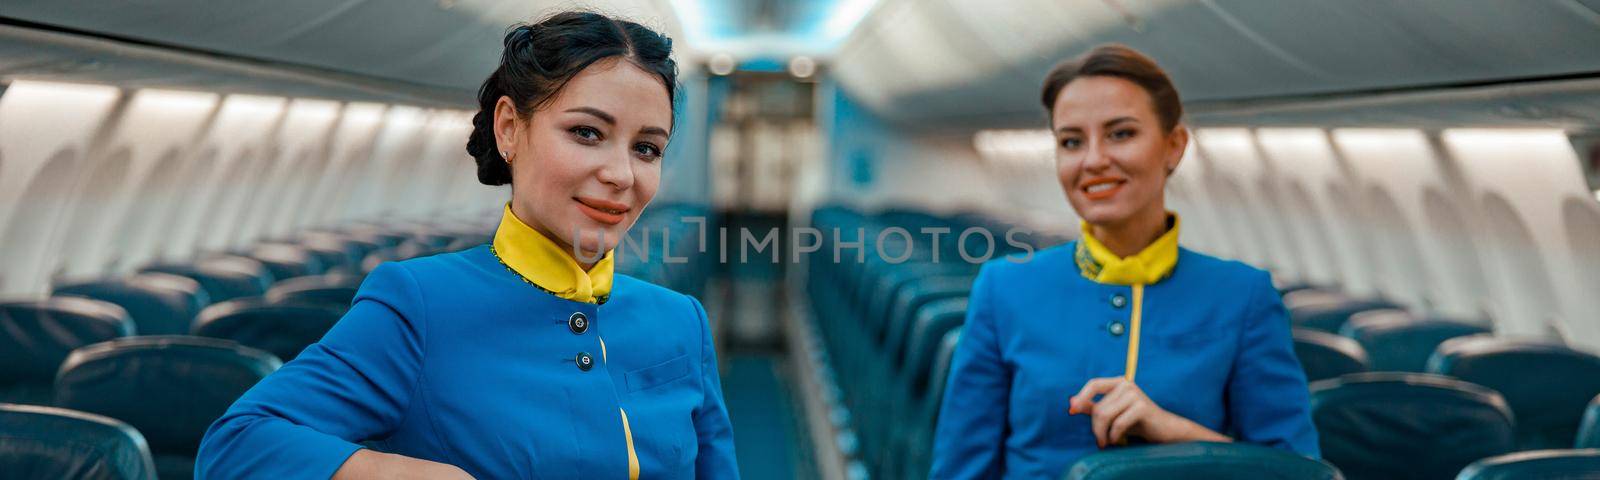 Cheerful stewardesses standing in aircraft passenger salon by Yaroslav_astakhov